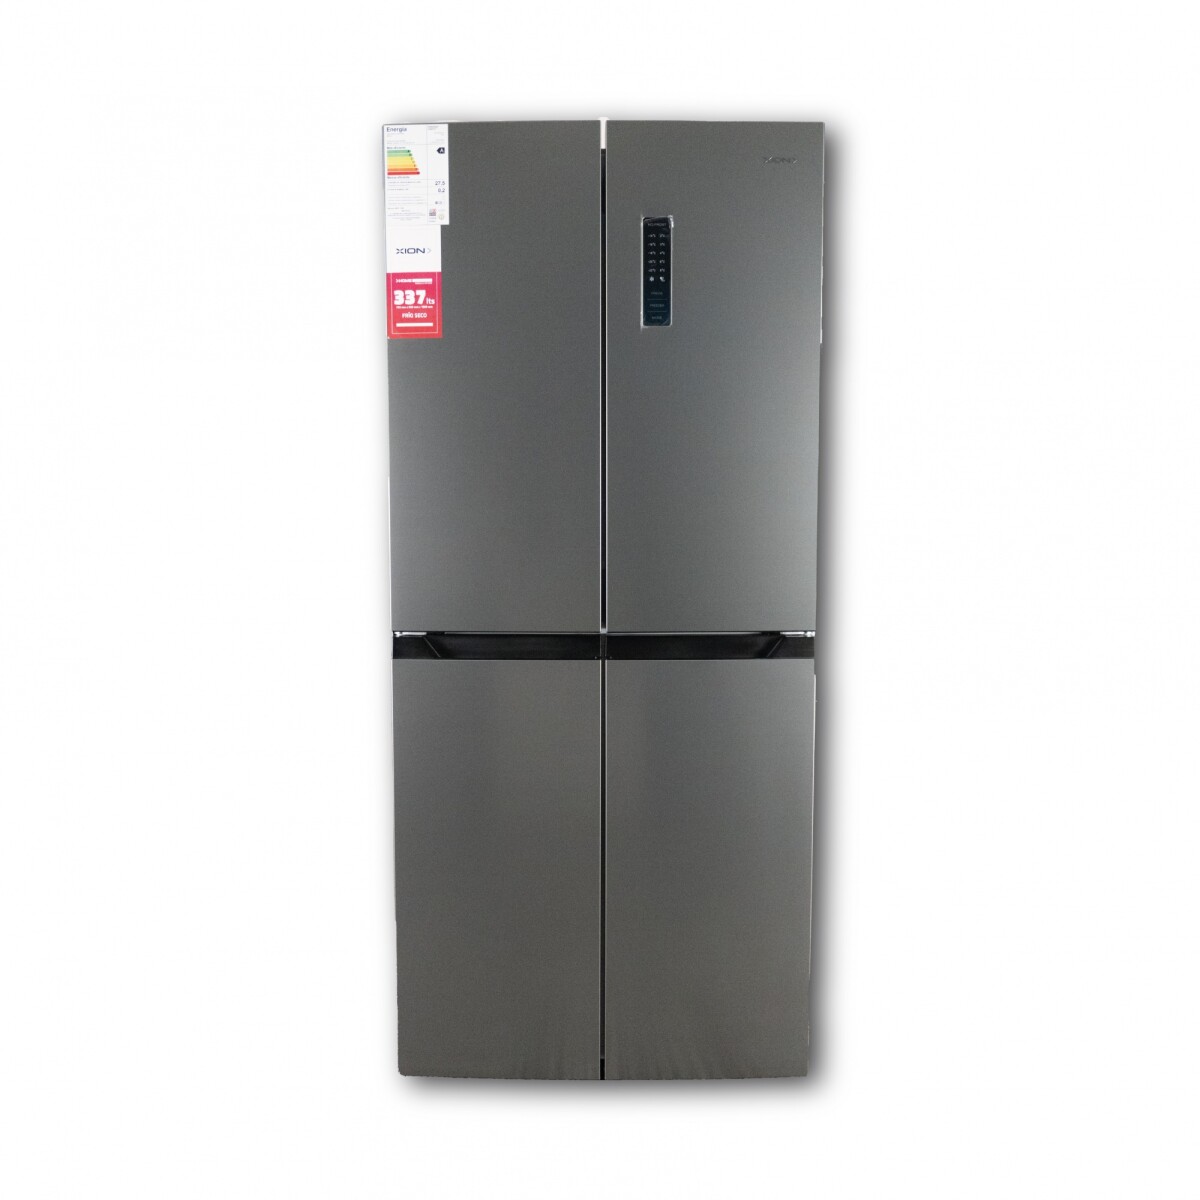 Refrigerador Multidoor XION 337 Lts. 